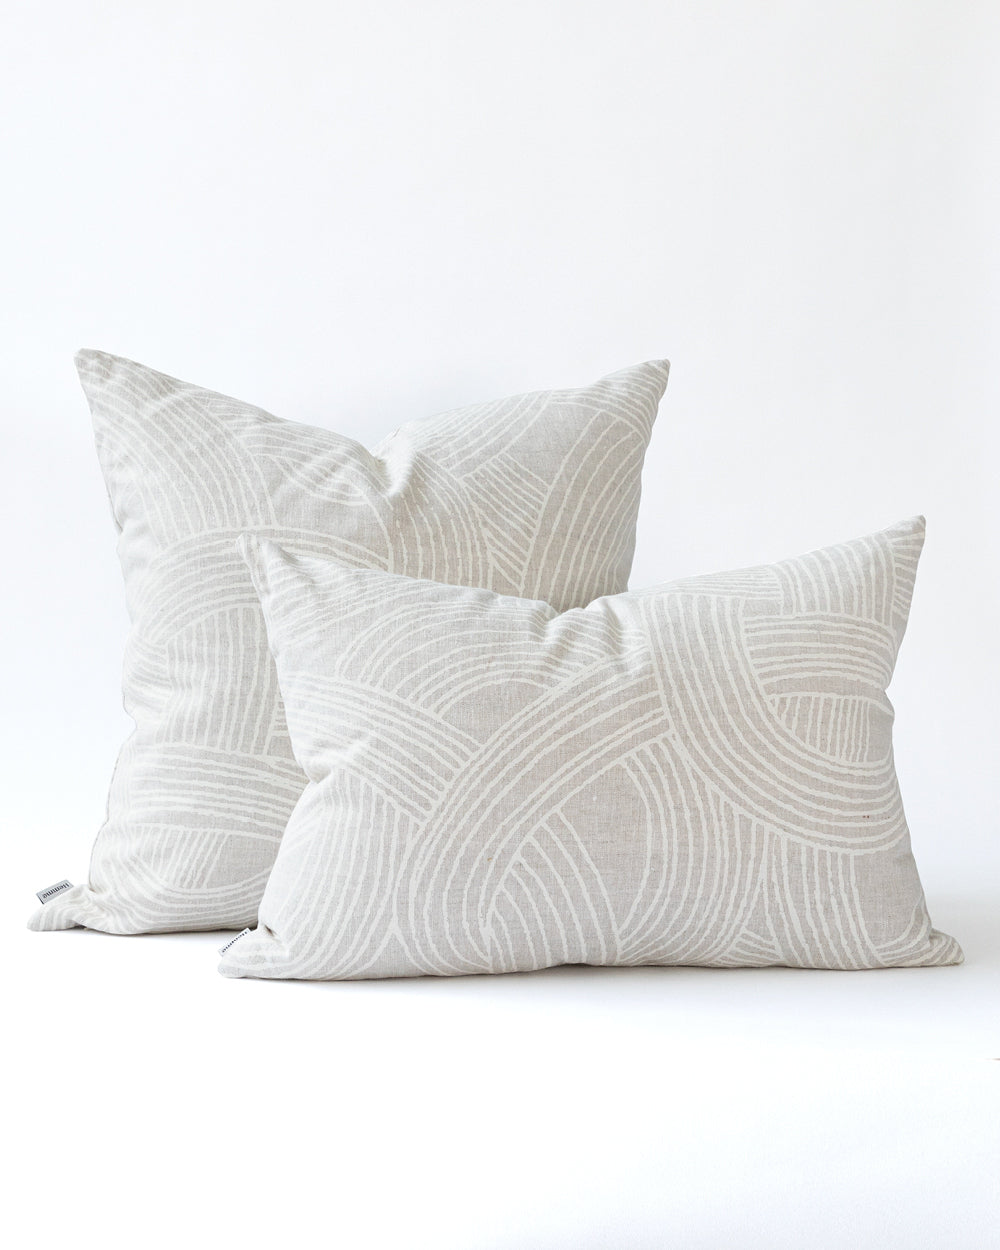 Two grey and white organic swirl pattern pillows